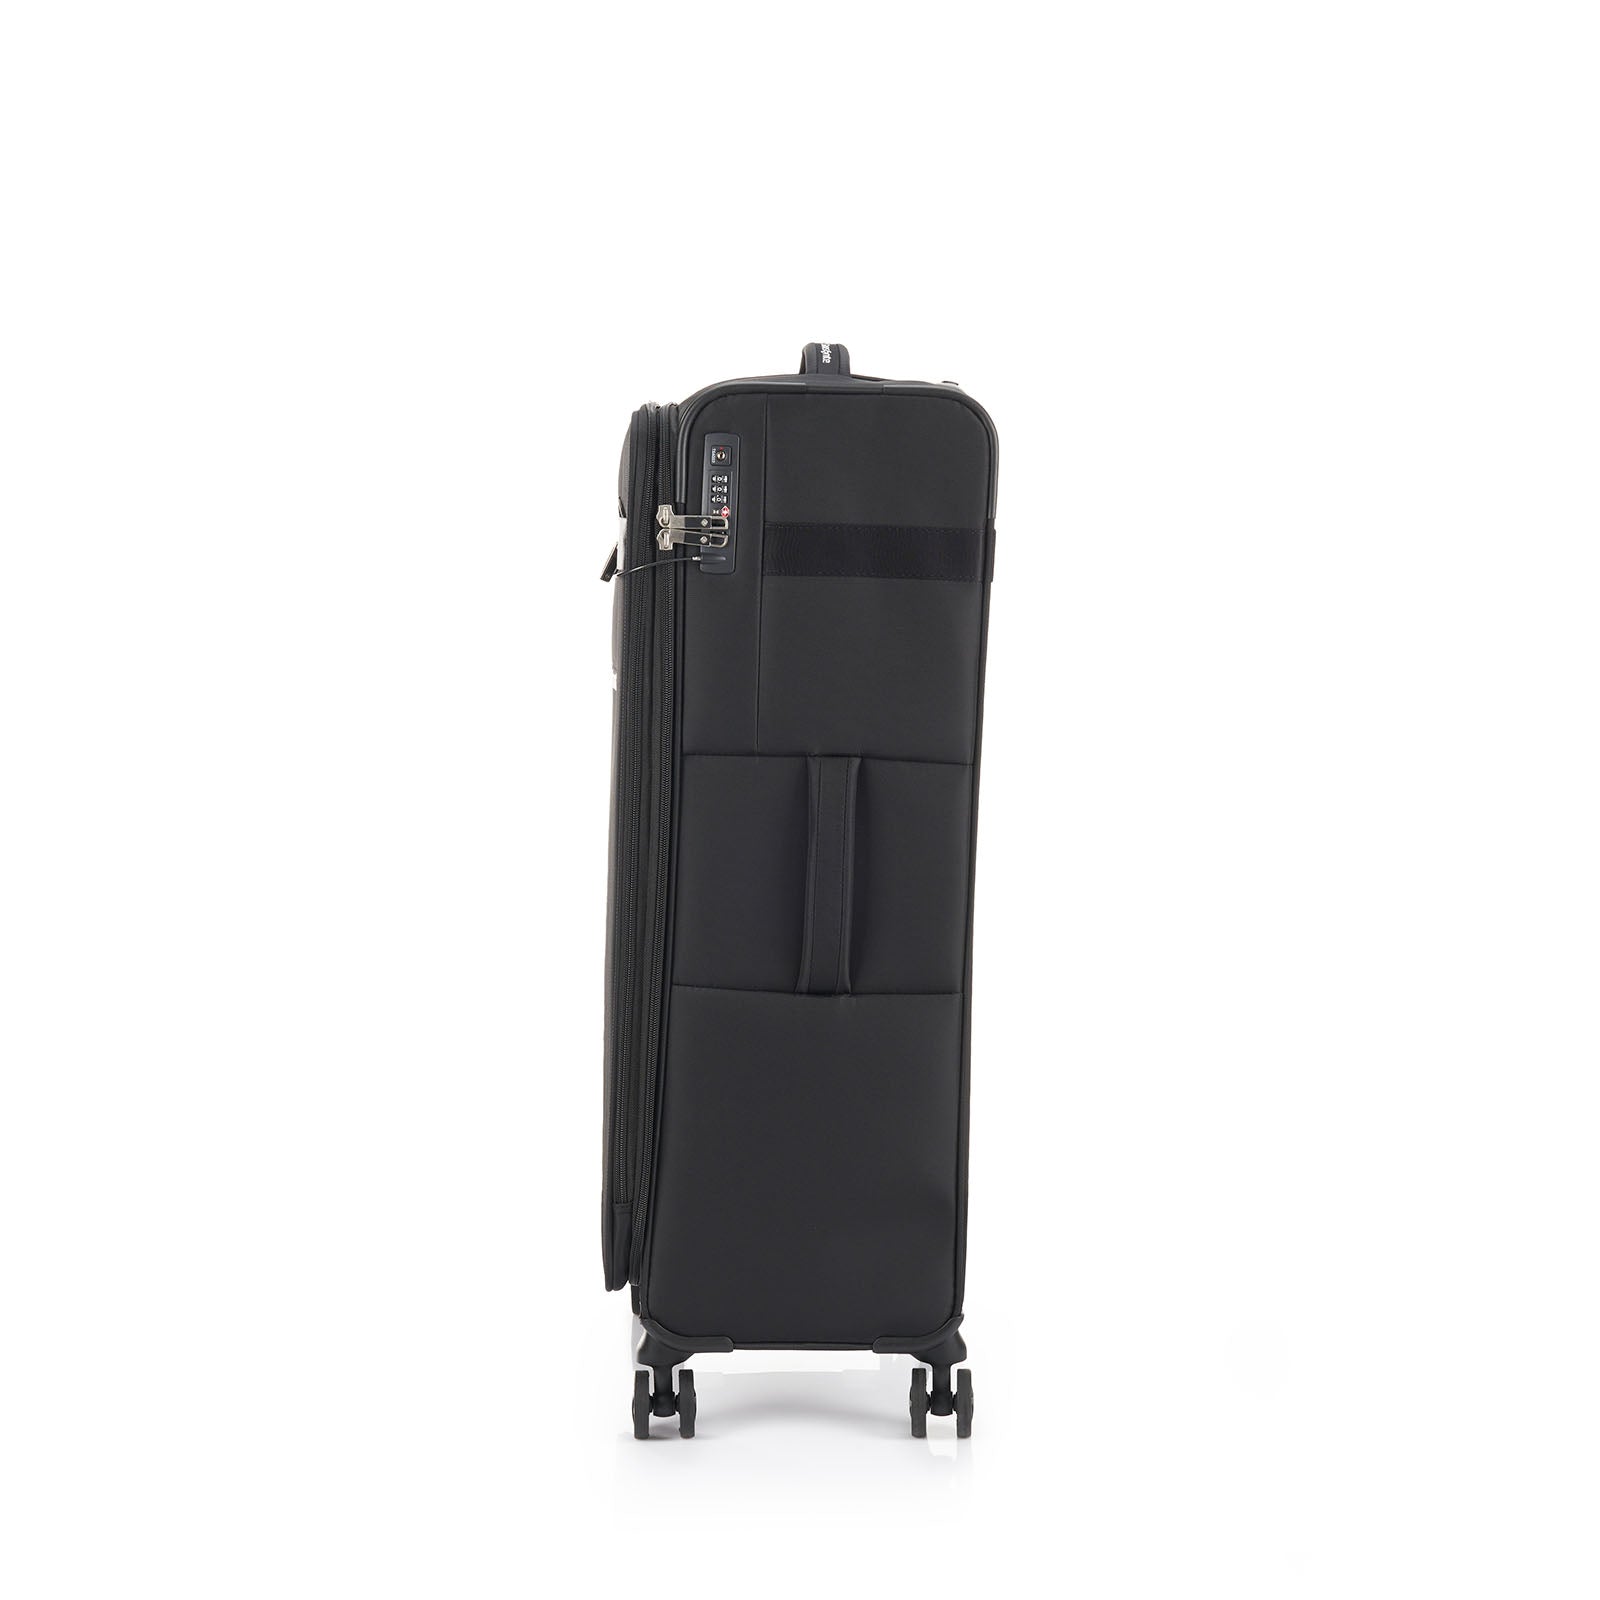 Samsonite City Rhythm 78cm Suitcase Black